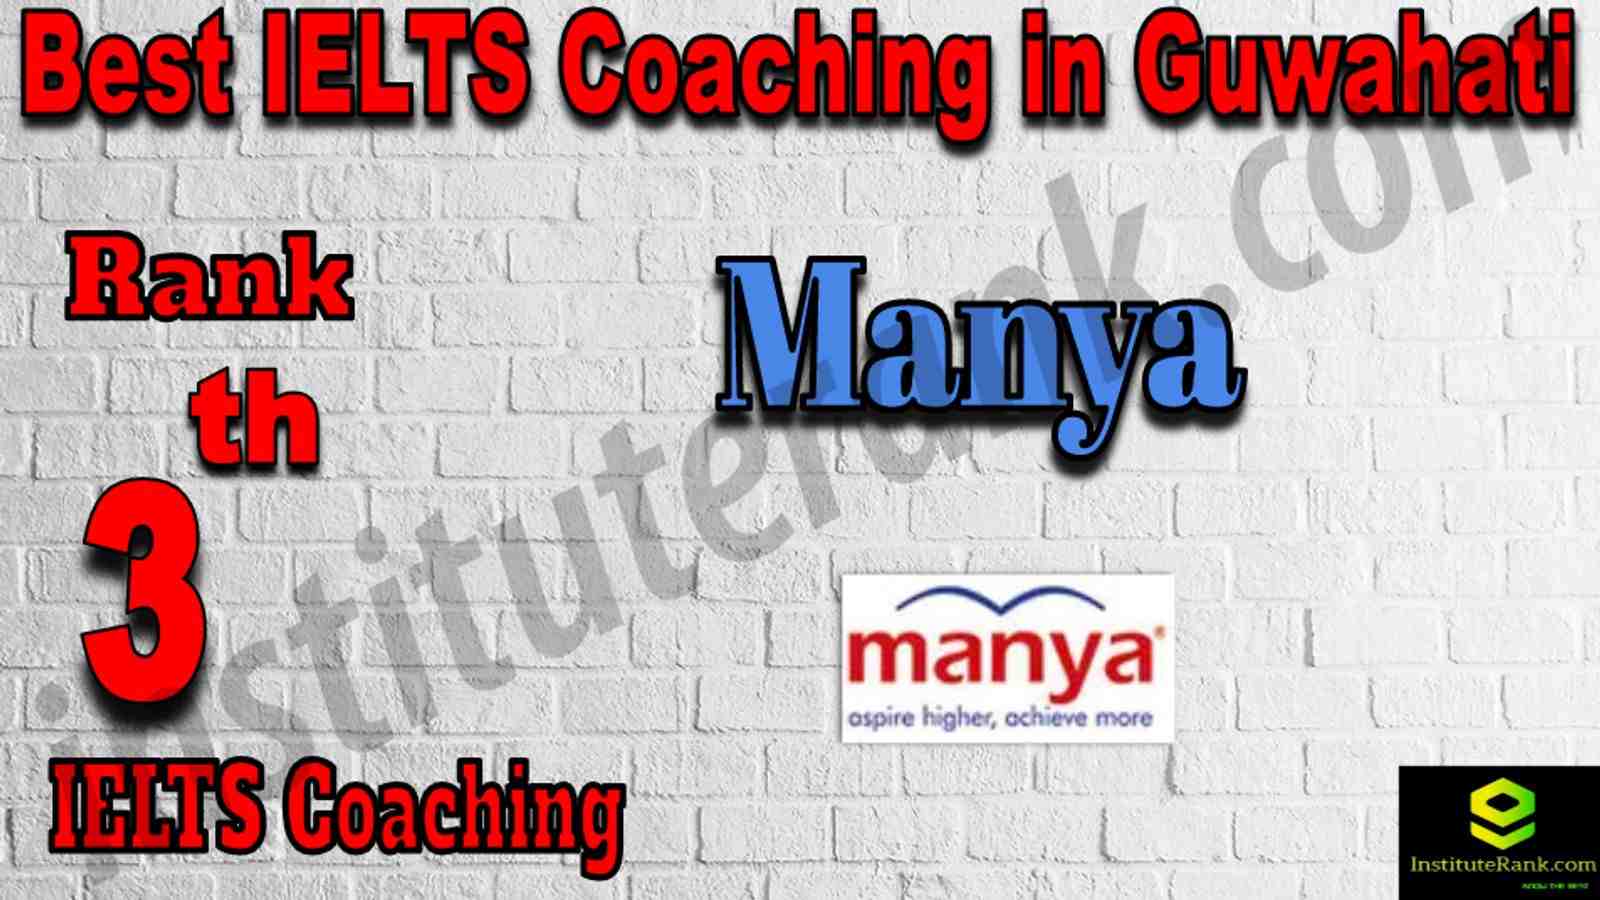 3rd Best IELTS Coaching in Guwahati